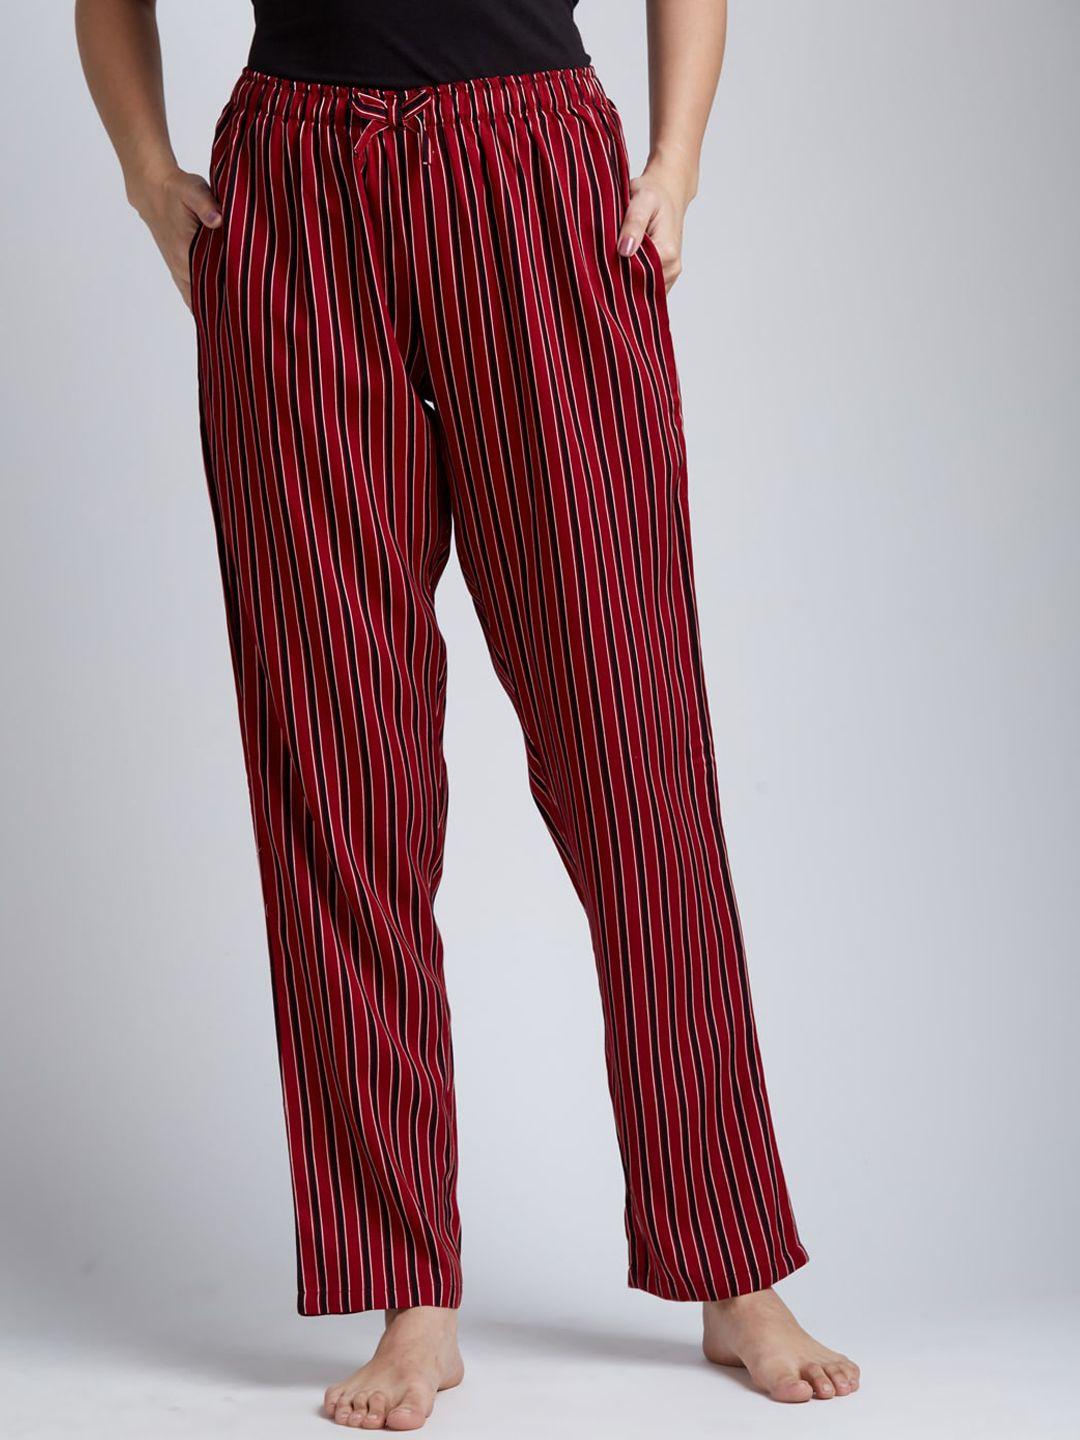 drape-in-vogue-women-red-&-black-striped-lounge-pants